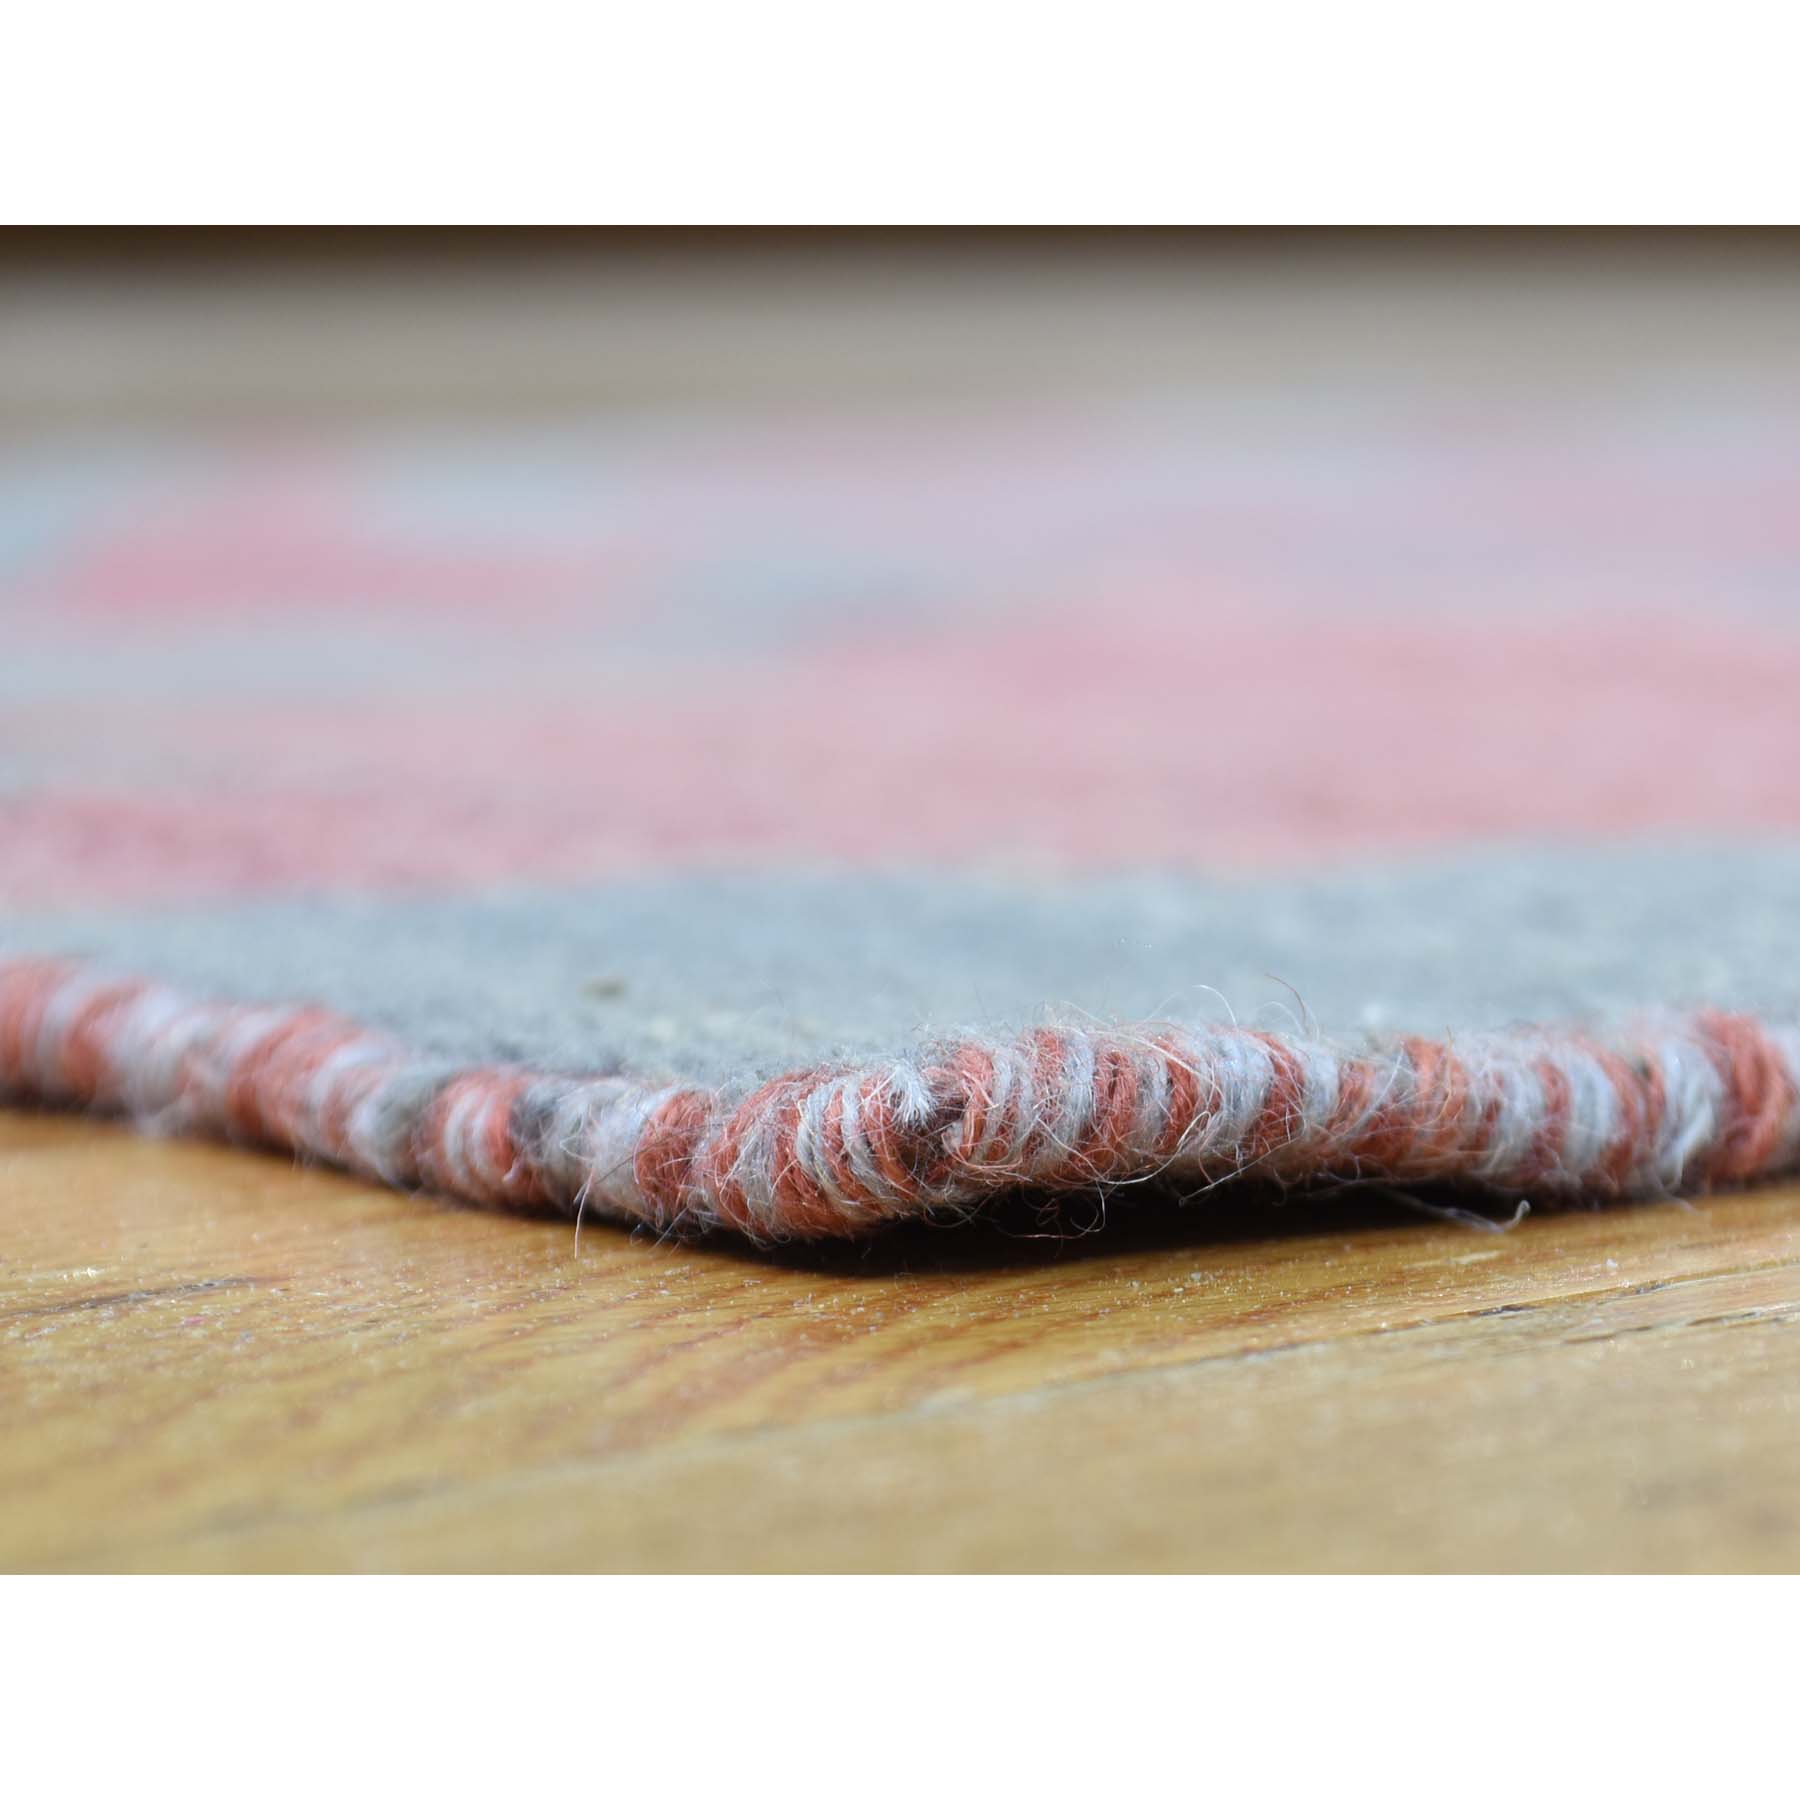 2-7 x8- Hand-Woven Durie Kilim Reversible Flat Weave Oriental Runner Rug 